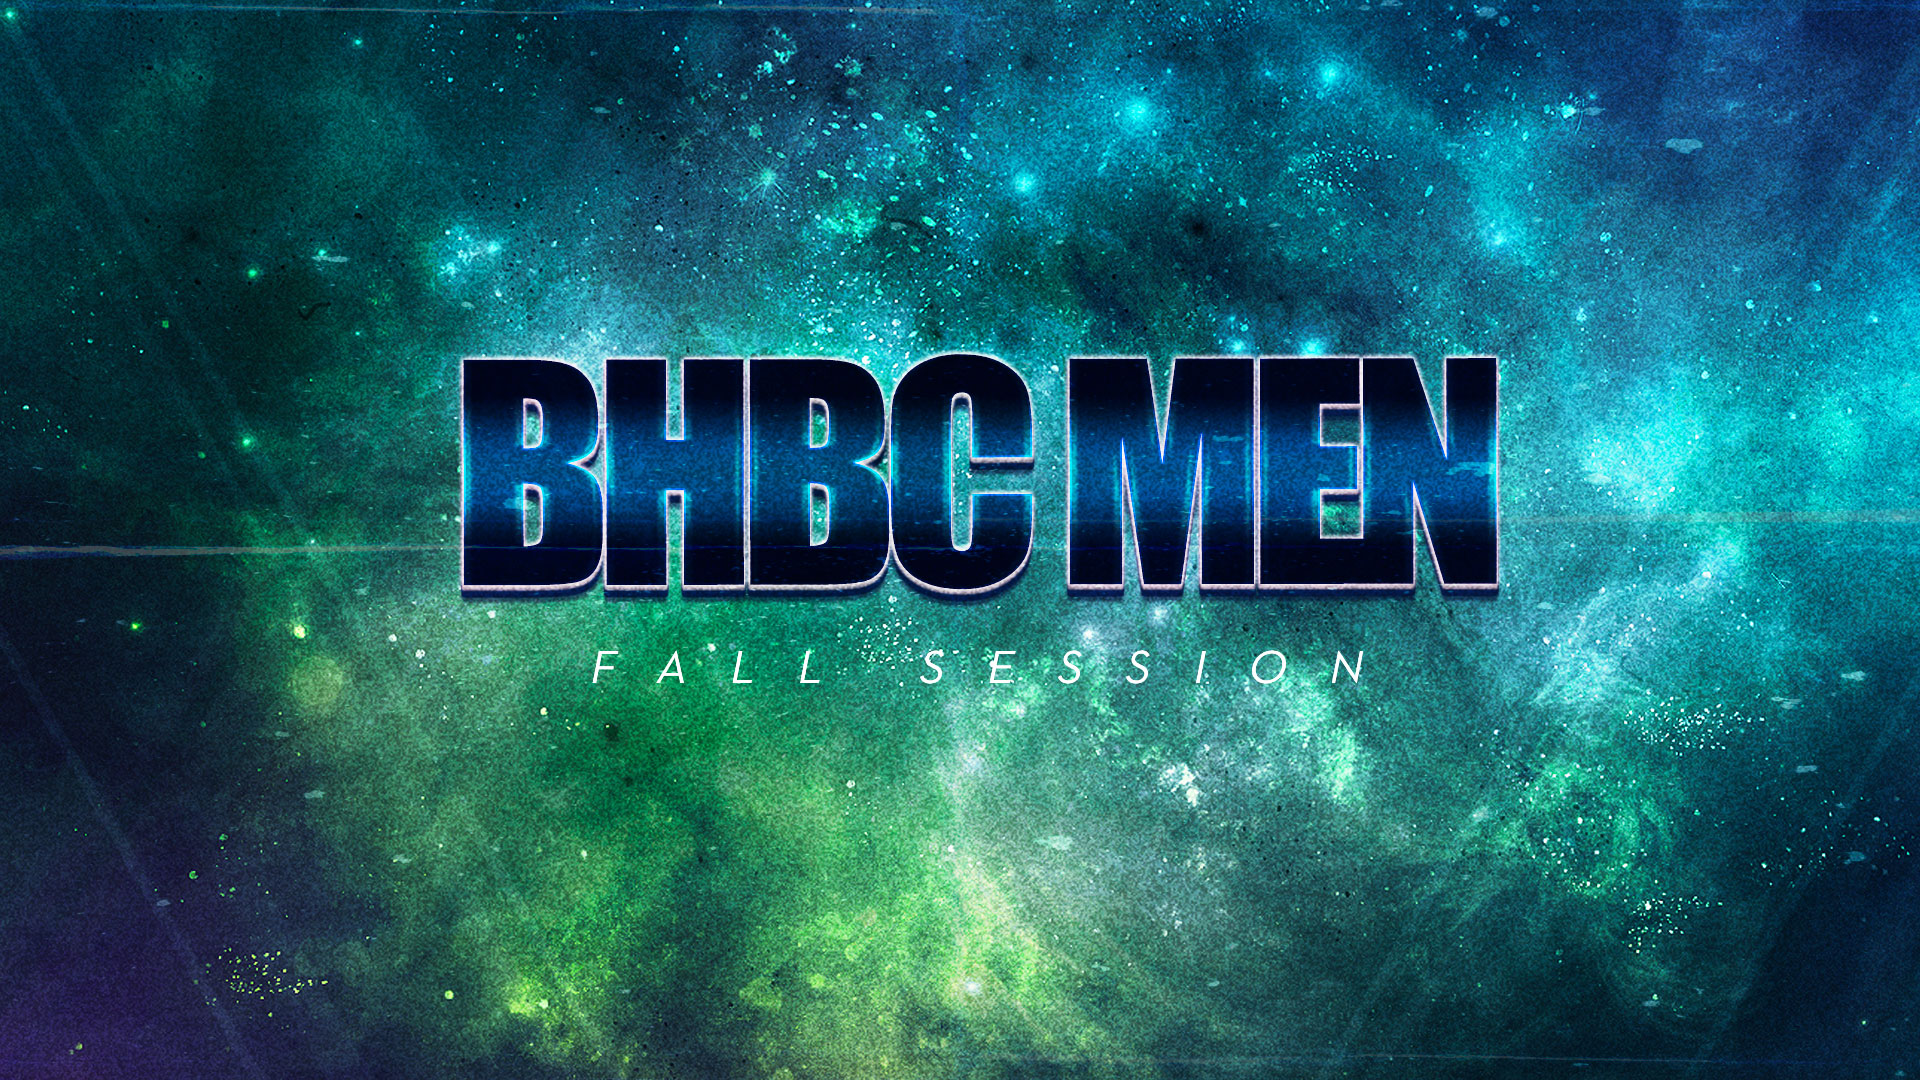 2020 - BHBC Men Winter: Ensley Campus